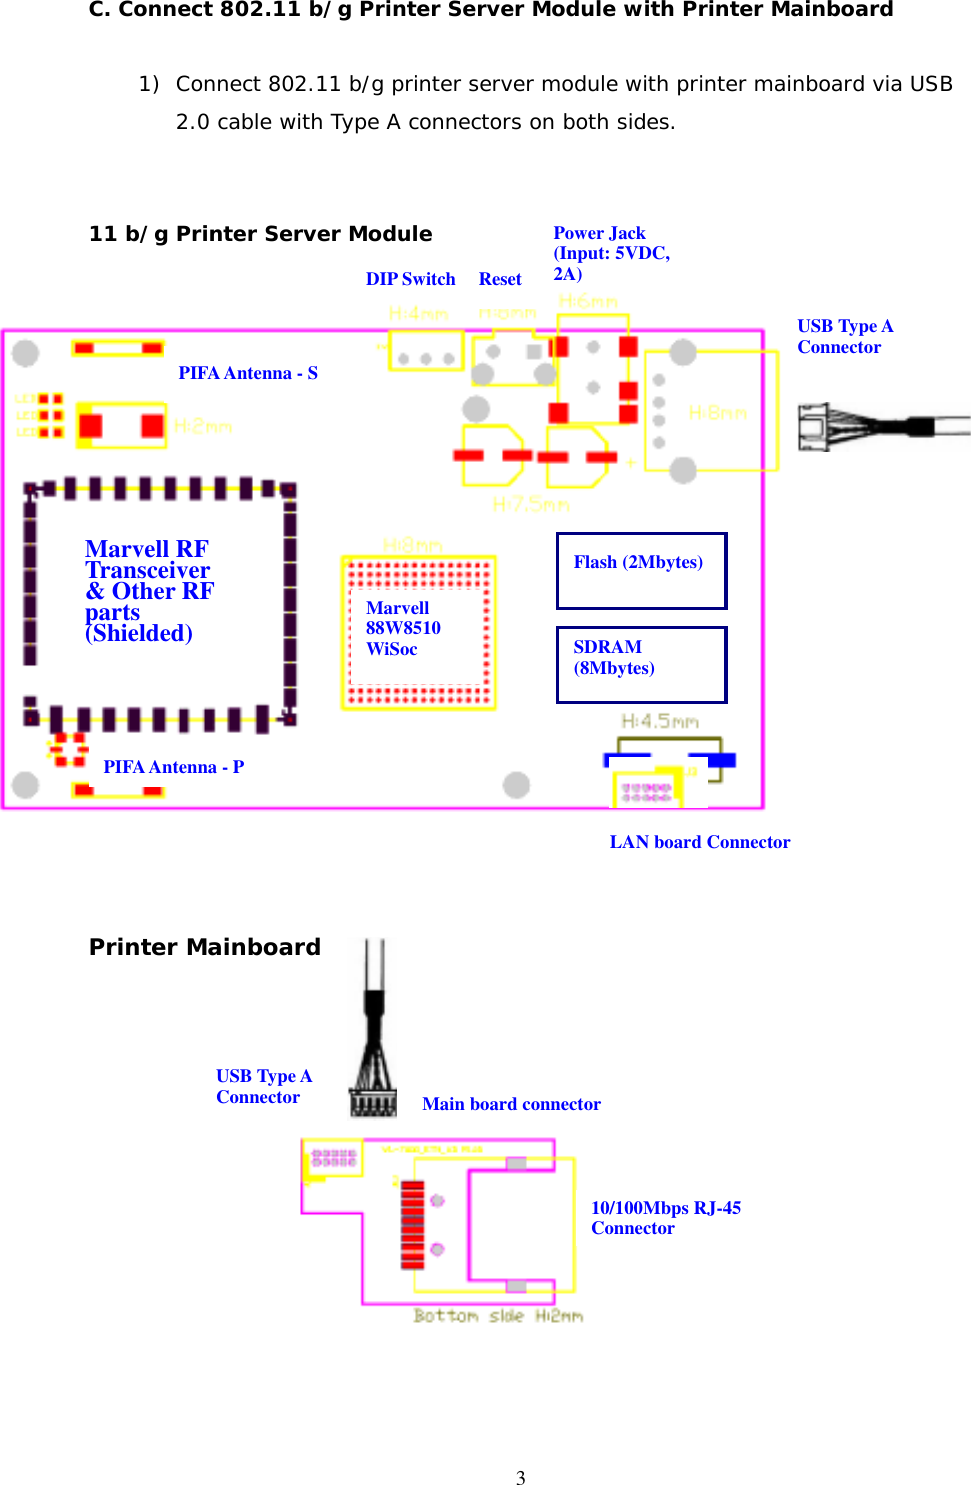   3 C. Connect 802.11 b/g Printer Server Module with Printer Mainboard     1) Connect 802.11 b/g printer server module with printer mainboard via USB 2.0 cable with Type A connectors on both sides.    11 b/g Printer Server Module       Printer Mainboard             USB Type A Connector Marvell RF Transceiver &amp; Other RF parts (Shielded)  Marvell 88W8510 WiSoc  DIP Switch  ResetPower Jack (Input: 5VDC, 2A)Flash (2Mbytes) SDRAM (8Mbytes) PIFA Antenna - P PIFA Antenna - S LAN board Connector Main board connector   10/100Mbps RJ-45 ConnectorUSB Type A Connector 